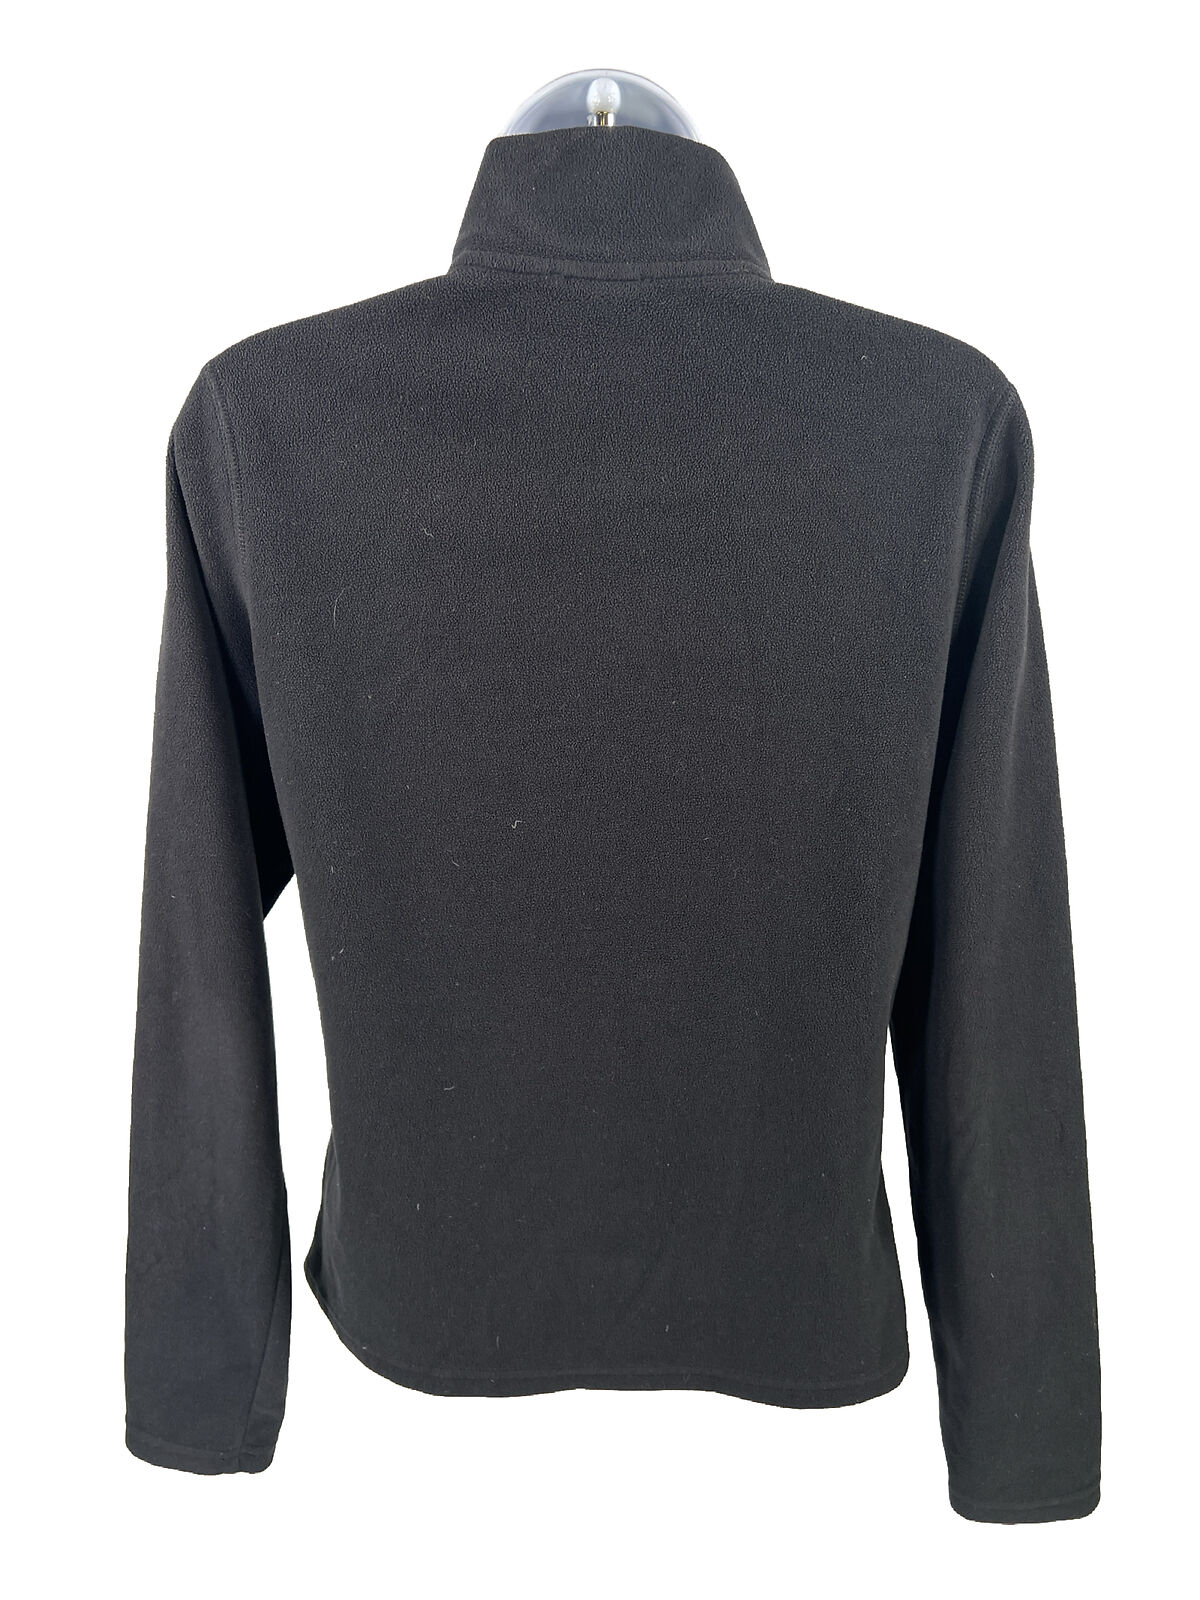 The North Face Women's Black TKA Fleece 1/4 Zip Pullover Jacket - S